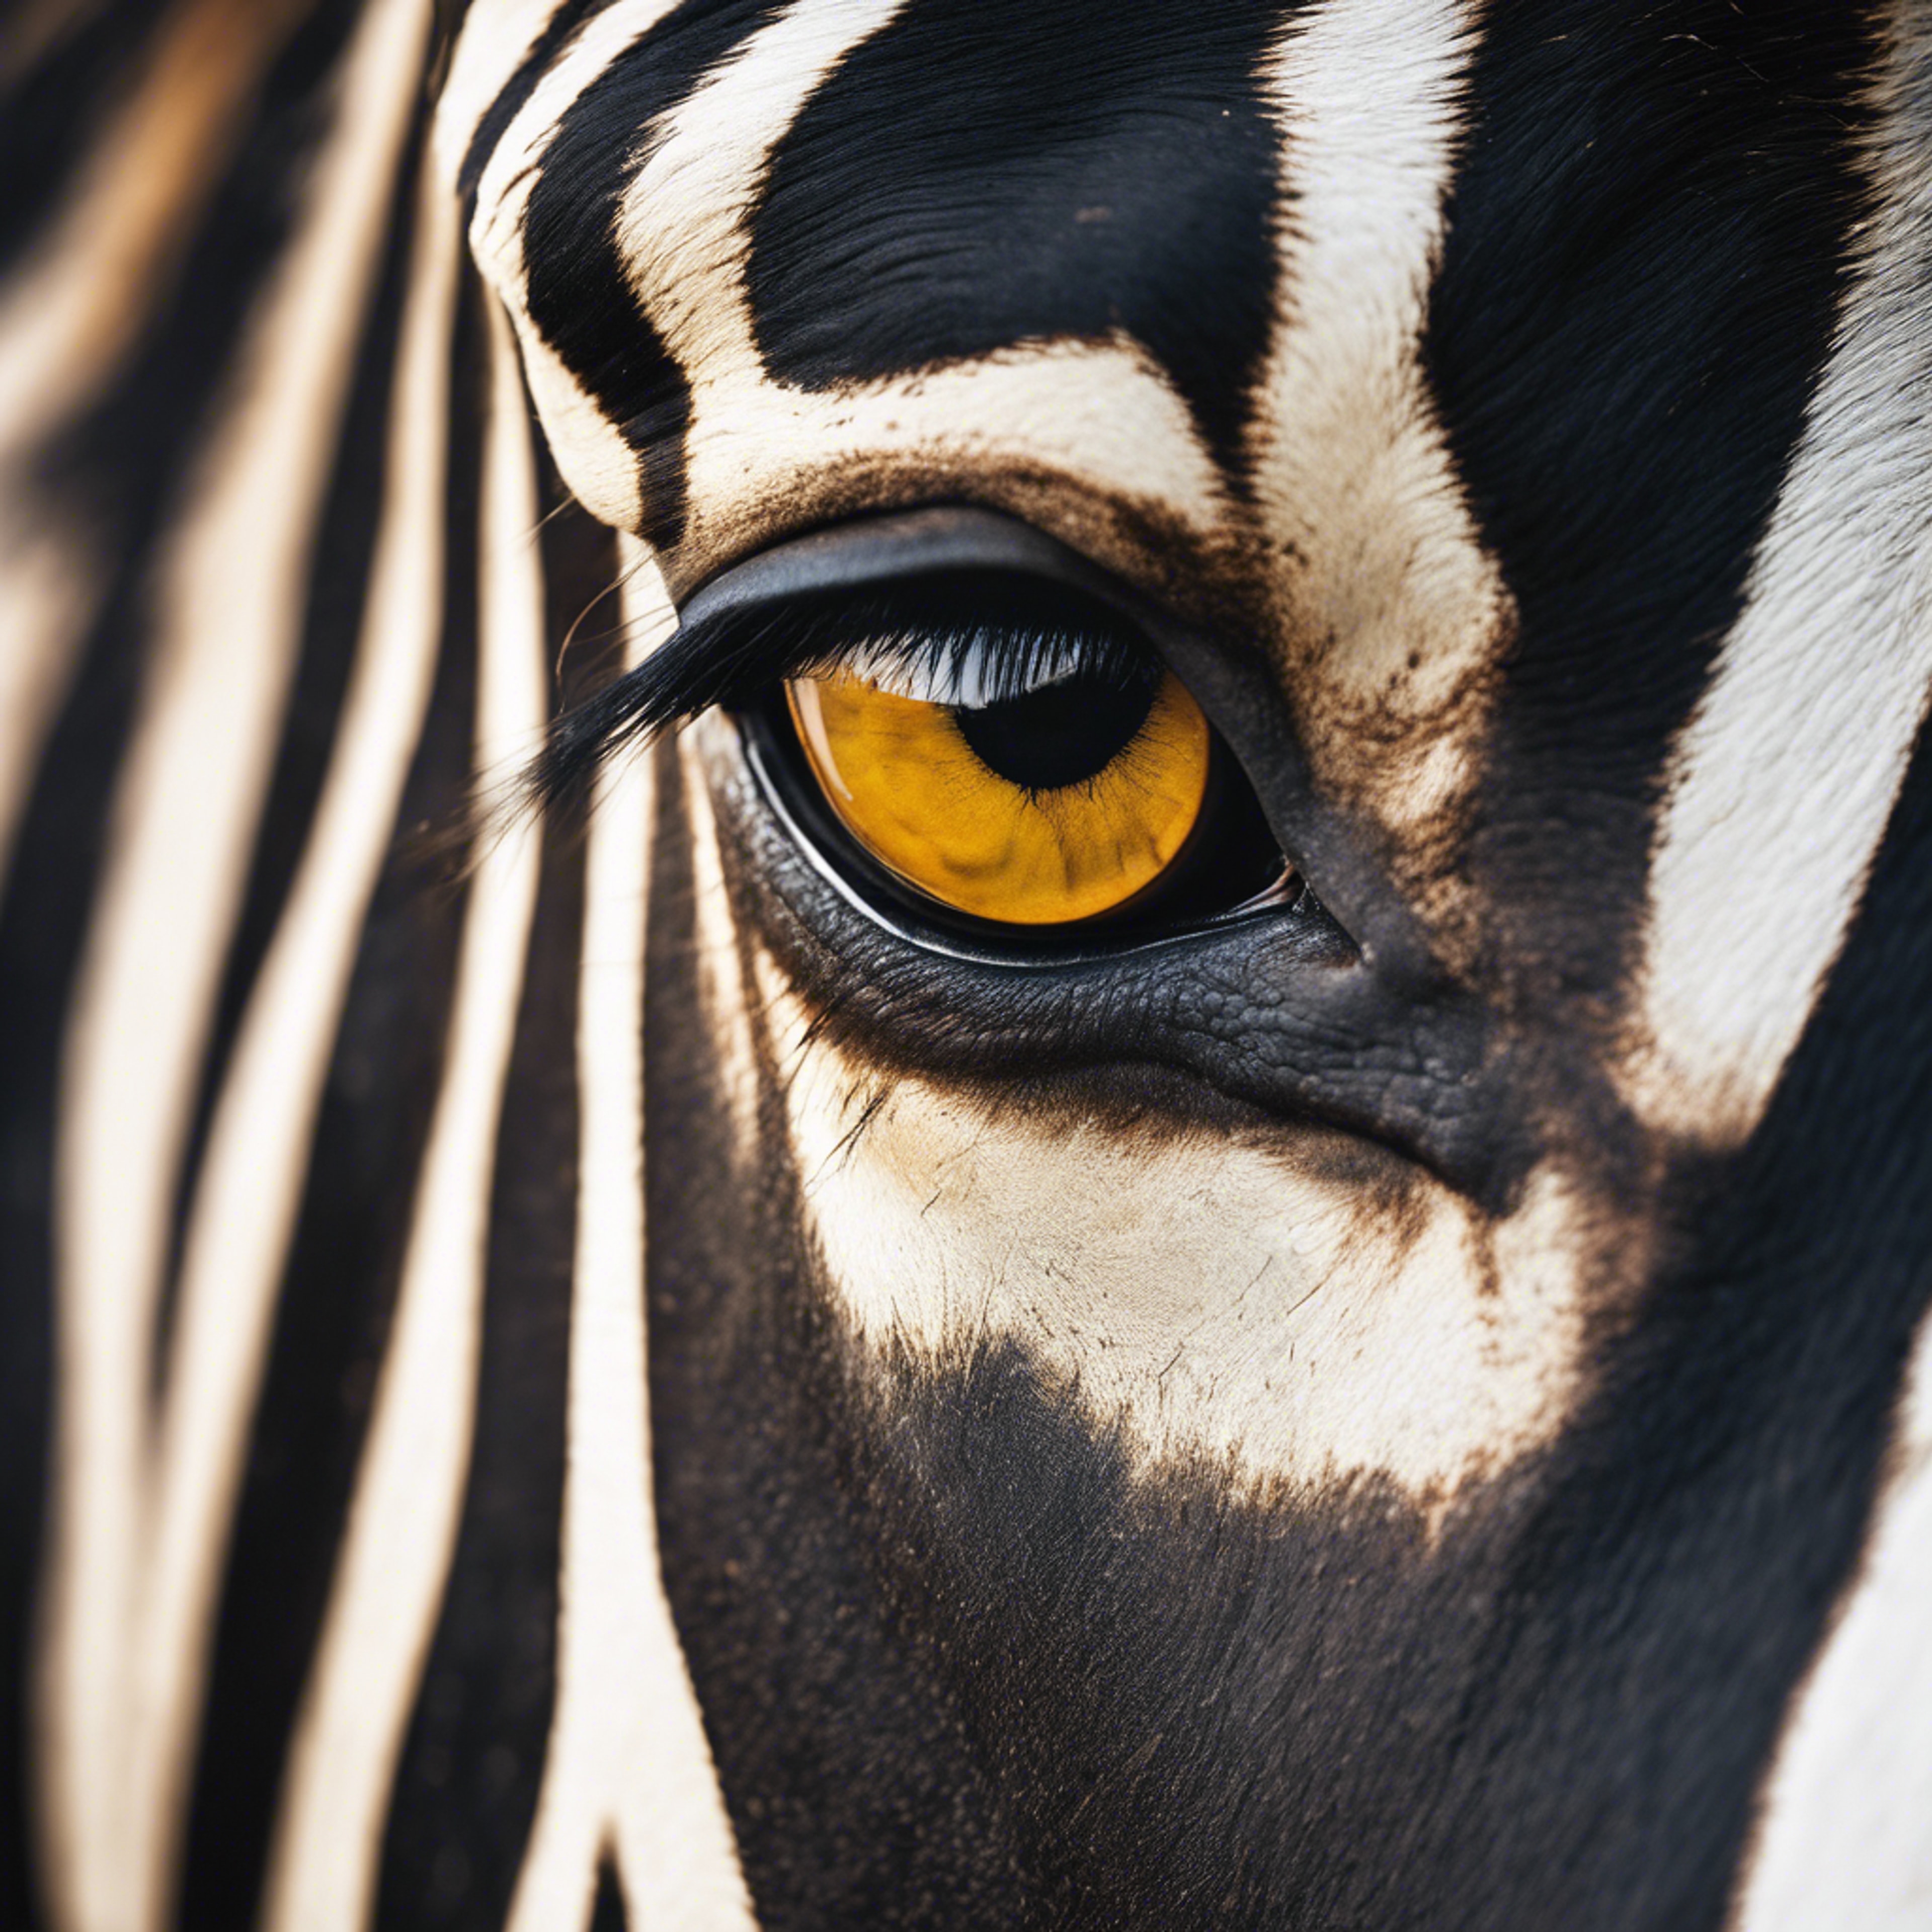 A closeup of a zebra's eye, showcasing its beautiful black and yellow striped pattern. Sfondo[50ee4a2668b0446d82c3]